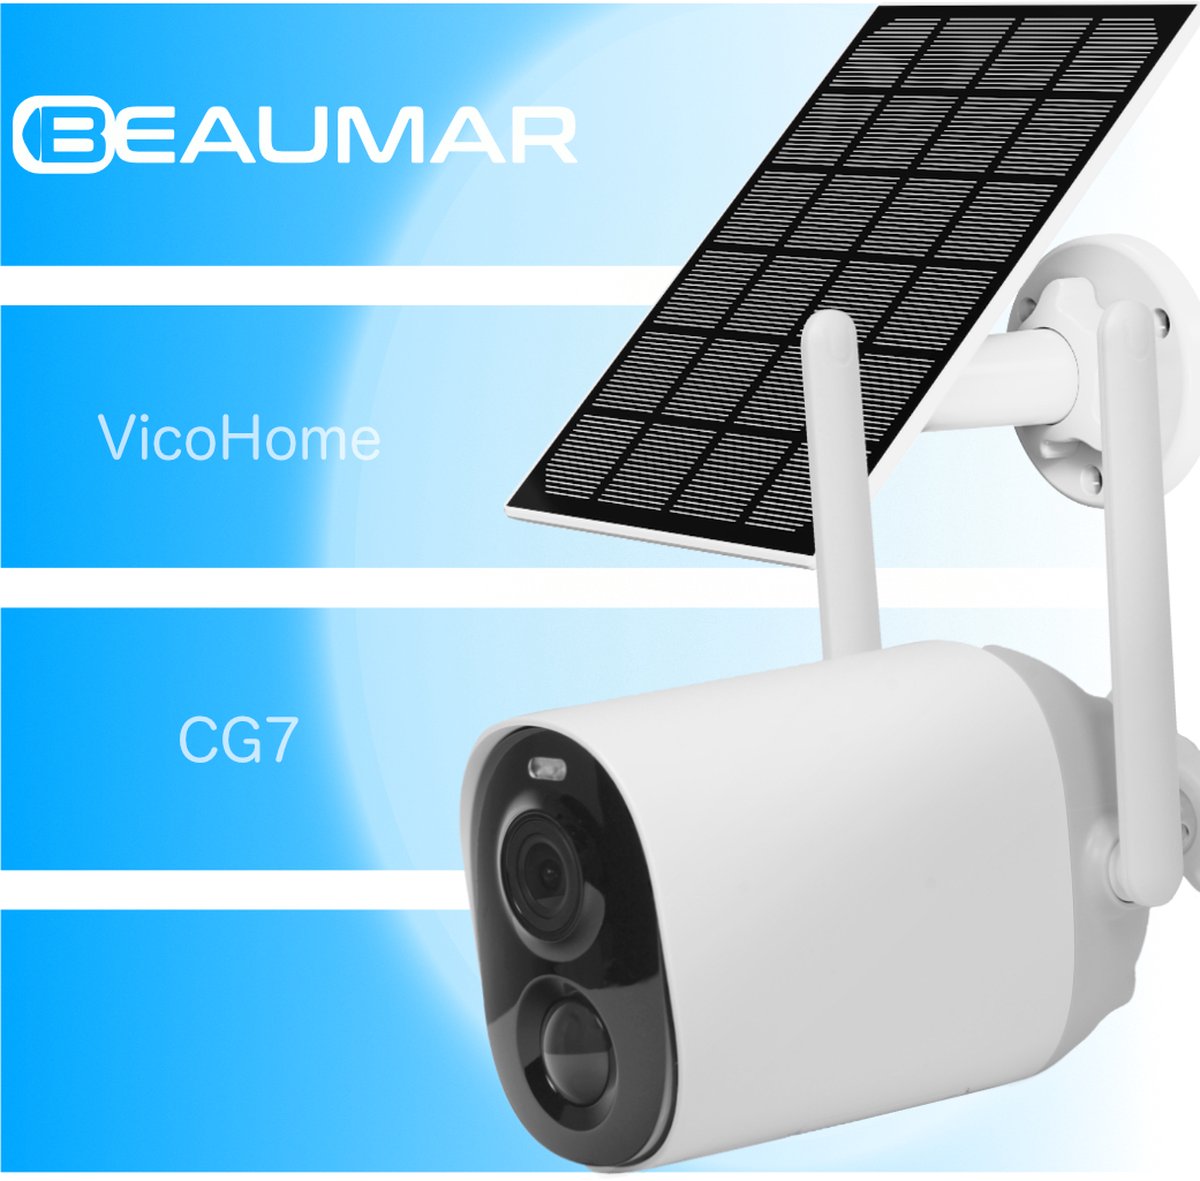 Beaumar ® Vicohome CG7 vicohome Met zonnepaneel outdoorcamera - gratis cloud opslag - accu camera - wifi camera - beveiligingscamera - 3 jaar garantie - camera beveiliging draadloos wifi - 8800mah